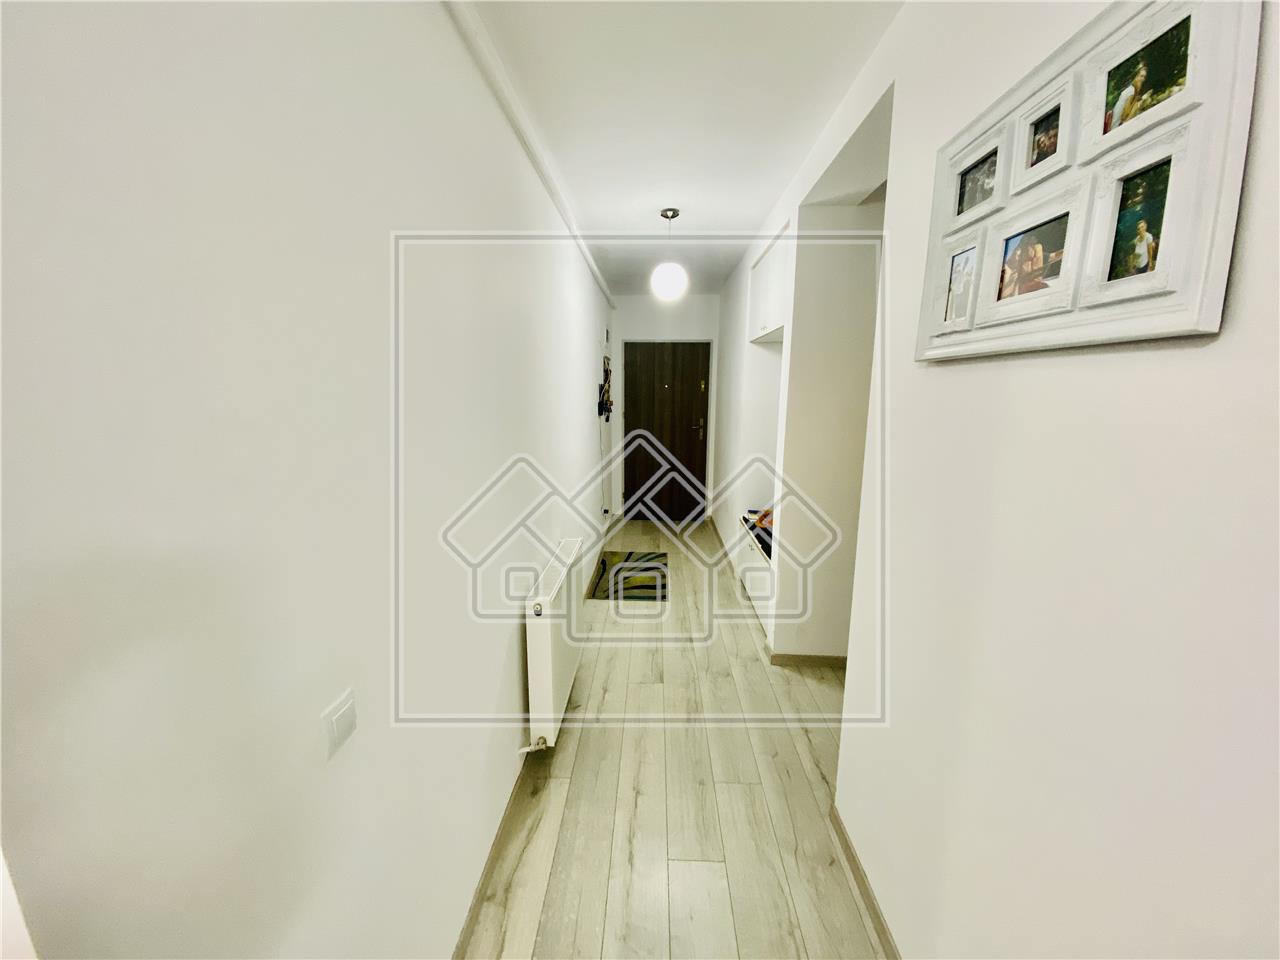 Wohnung zum Verkauf in Sibiu - 74 qm - Etage 1/2 - Selimbar